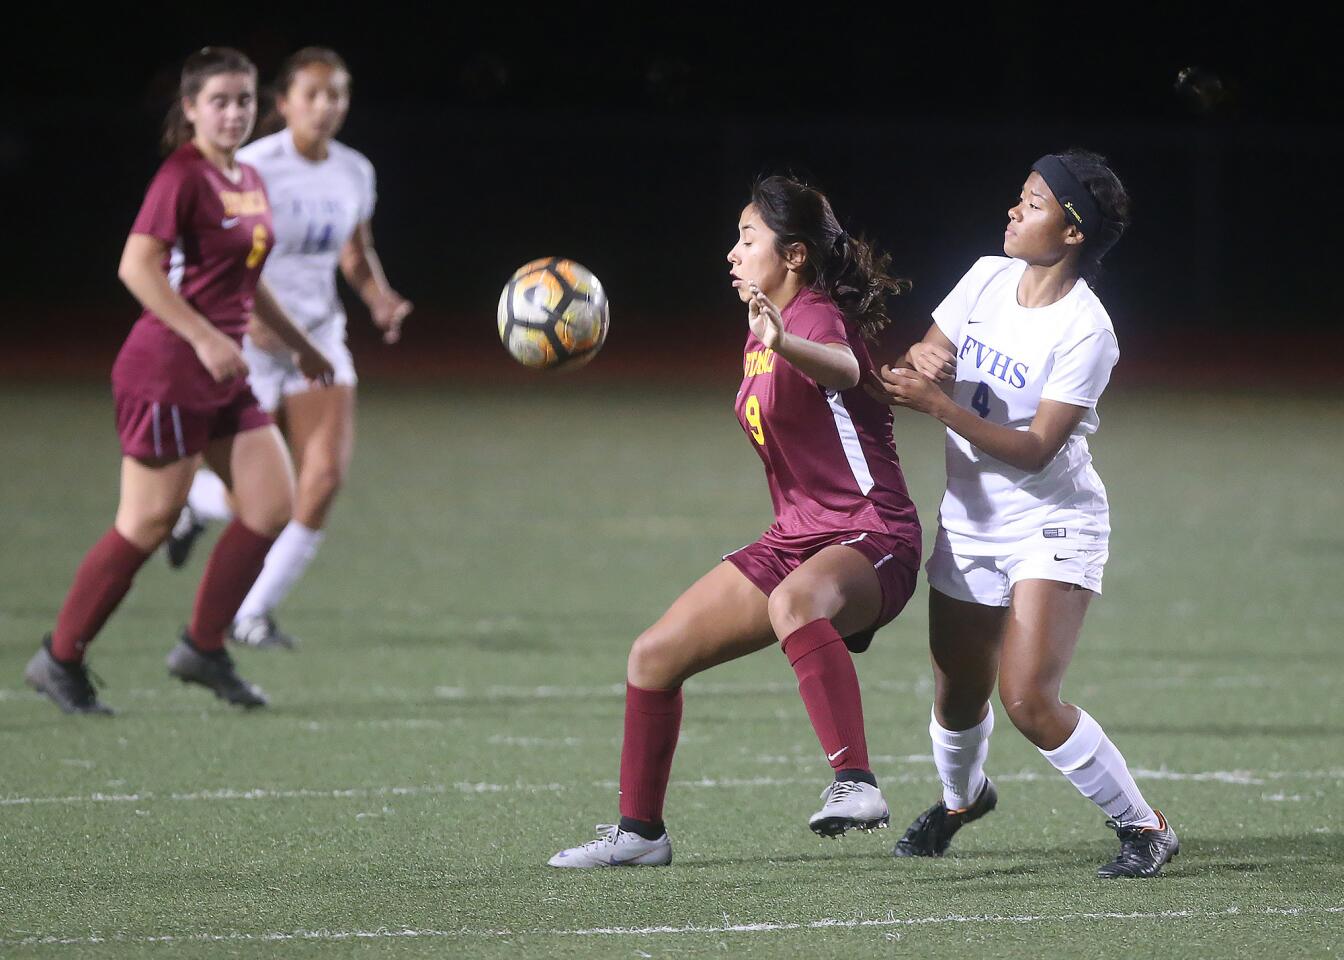 Photo Gallery: Fountain Valley vs. Estancia in girls’ soccer